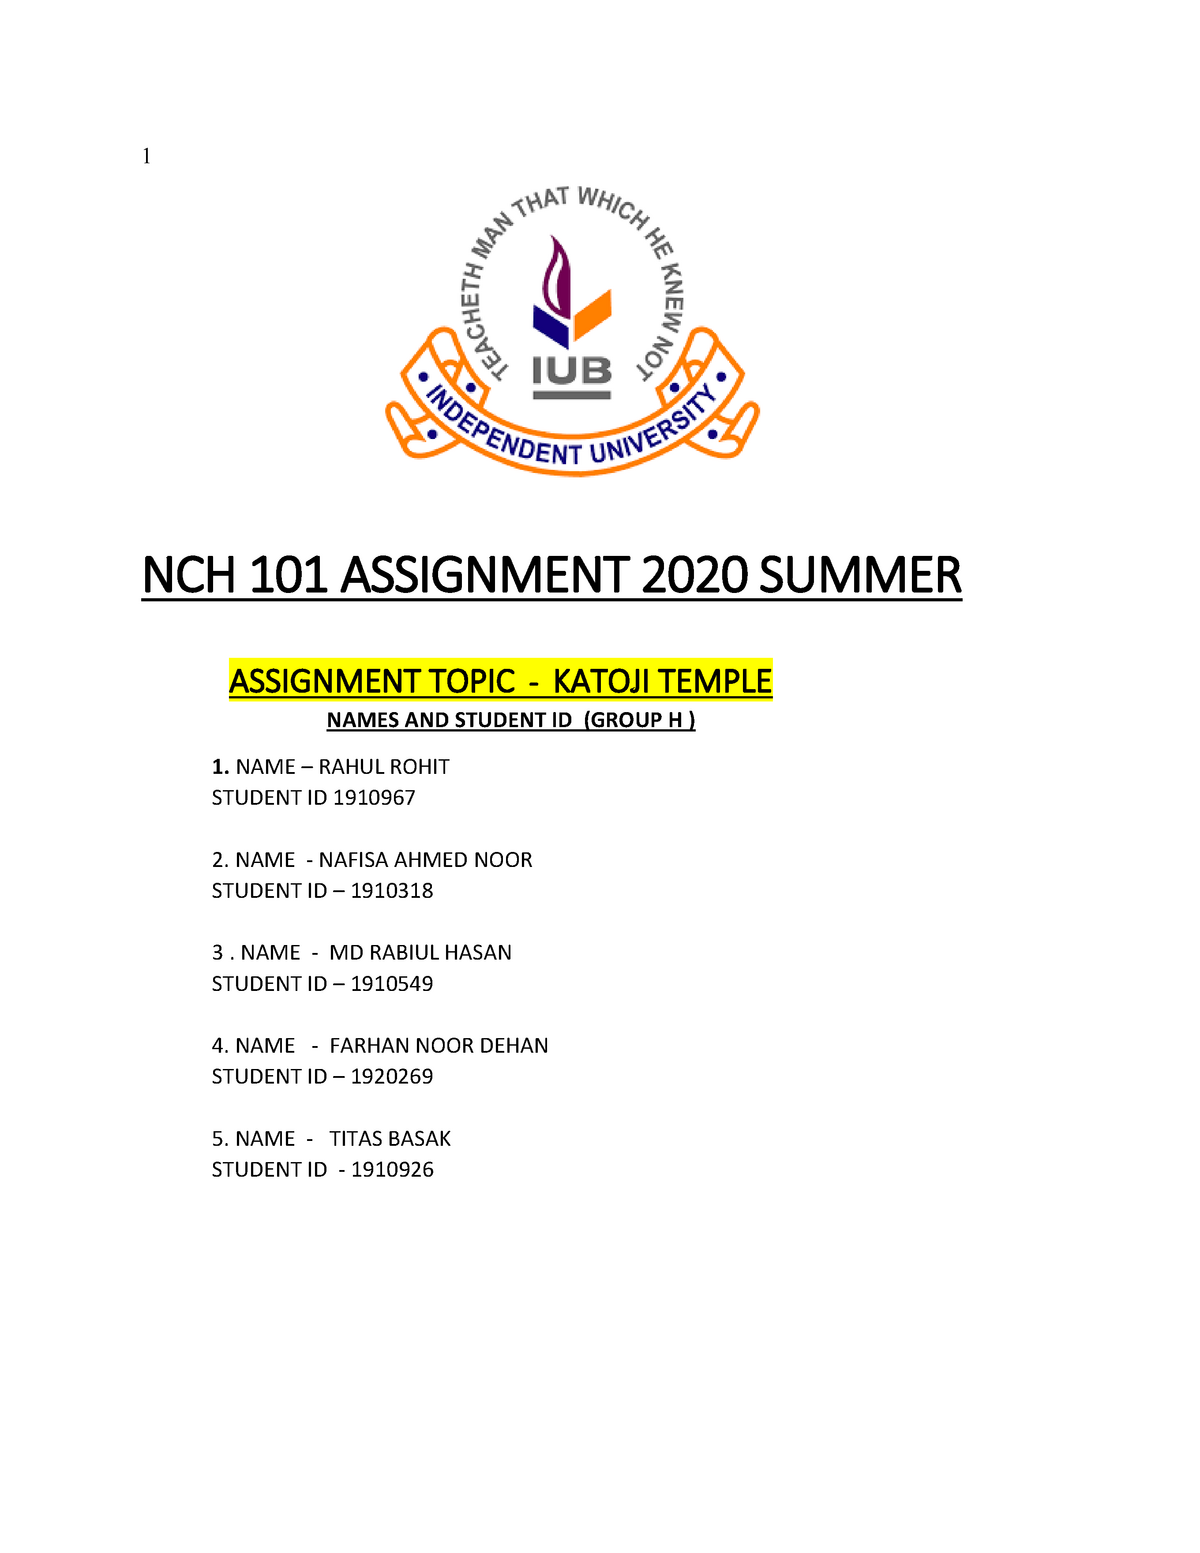 grade 3 assignment 2020